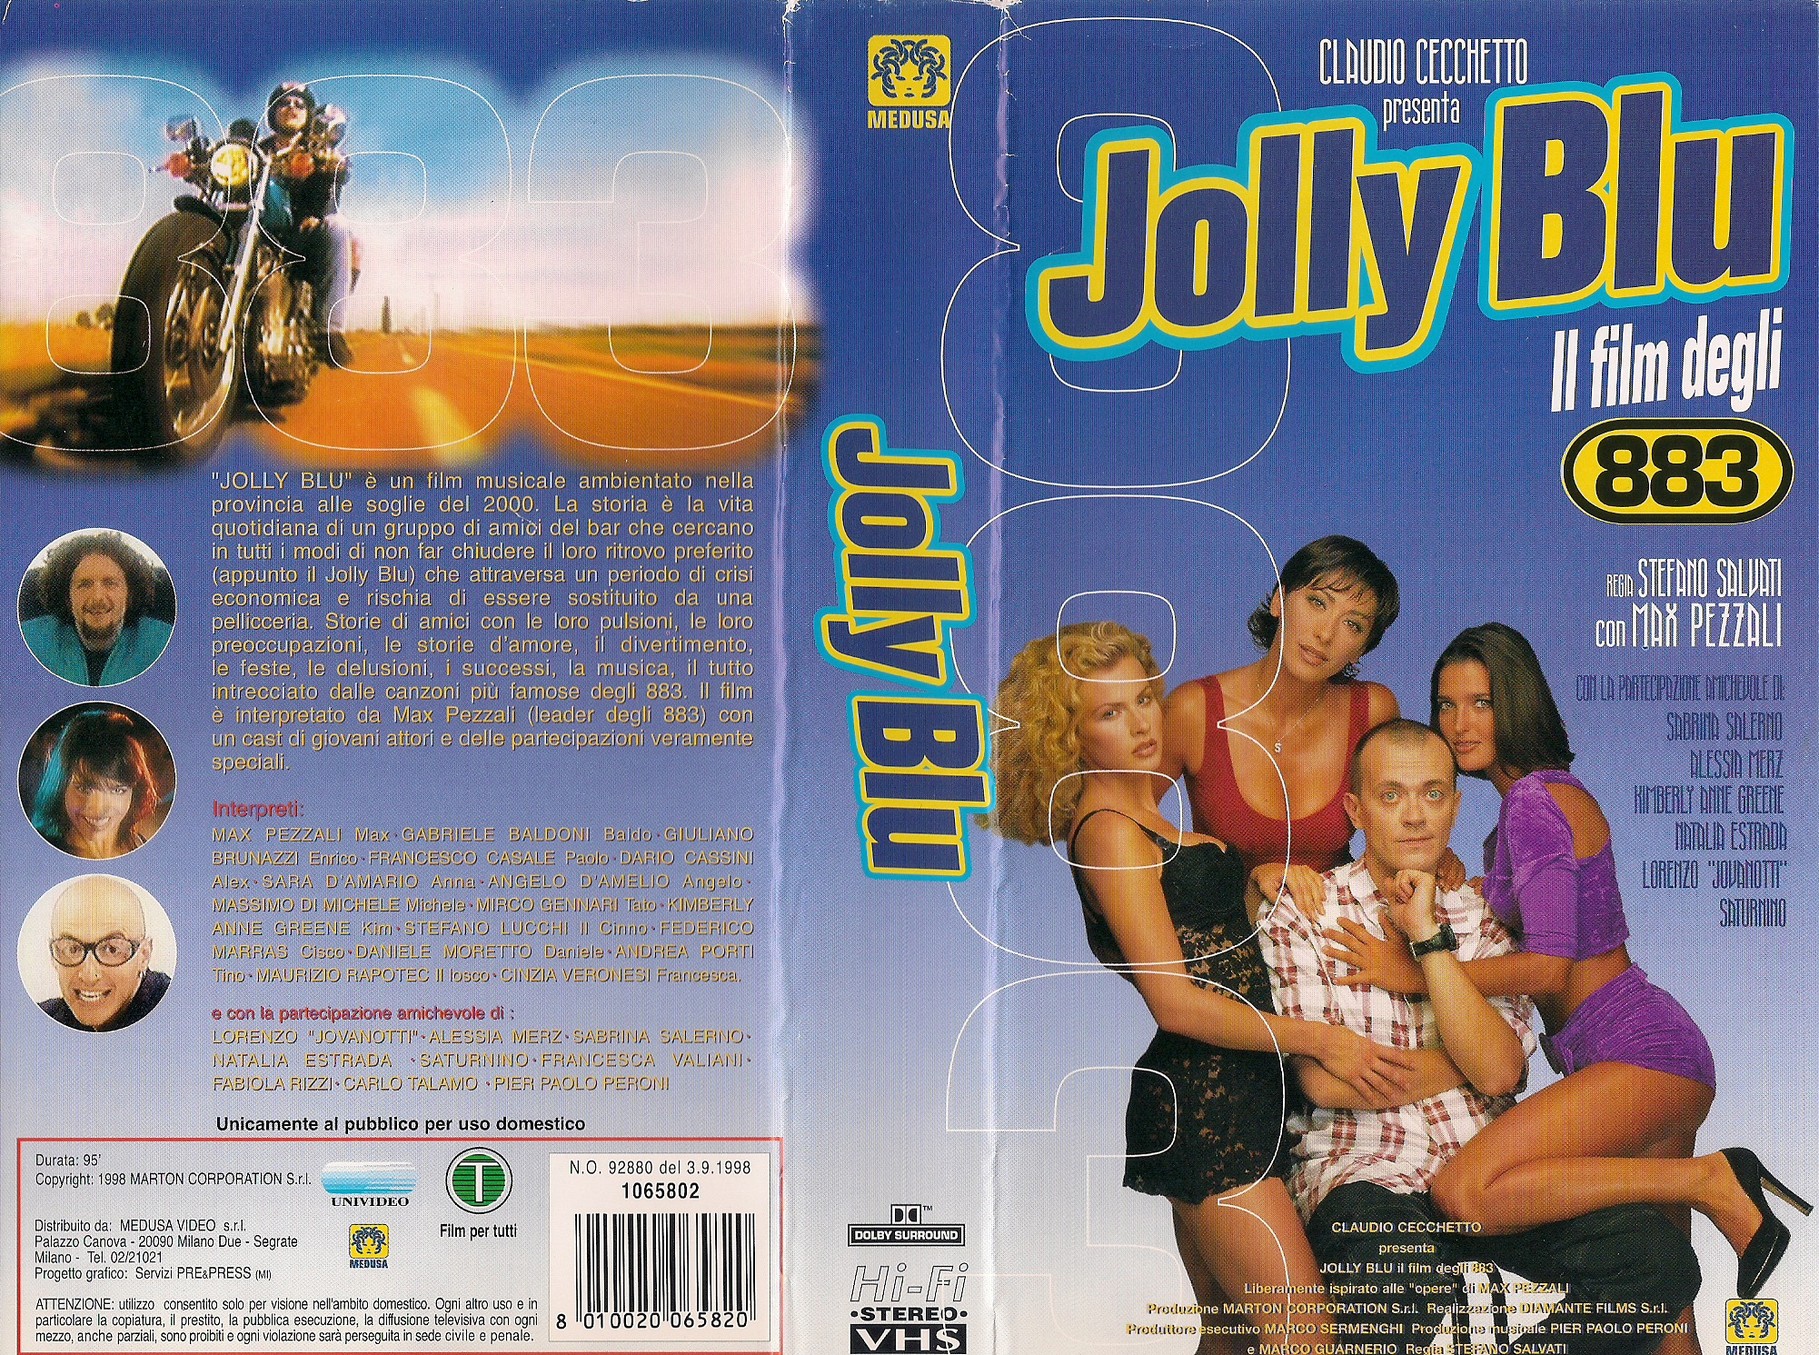 883: quando Angelina Jolie fu scartata per il film "Jolly blu"